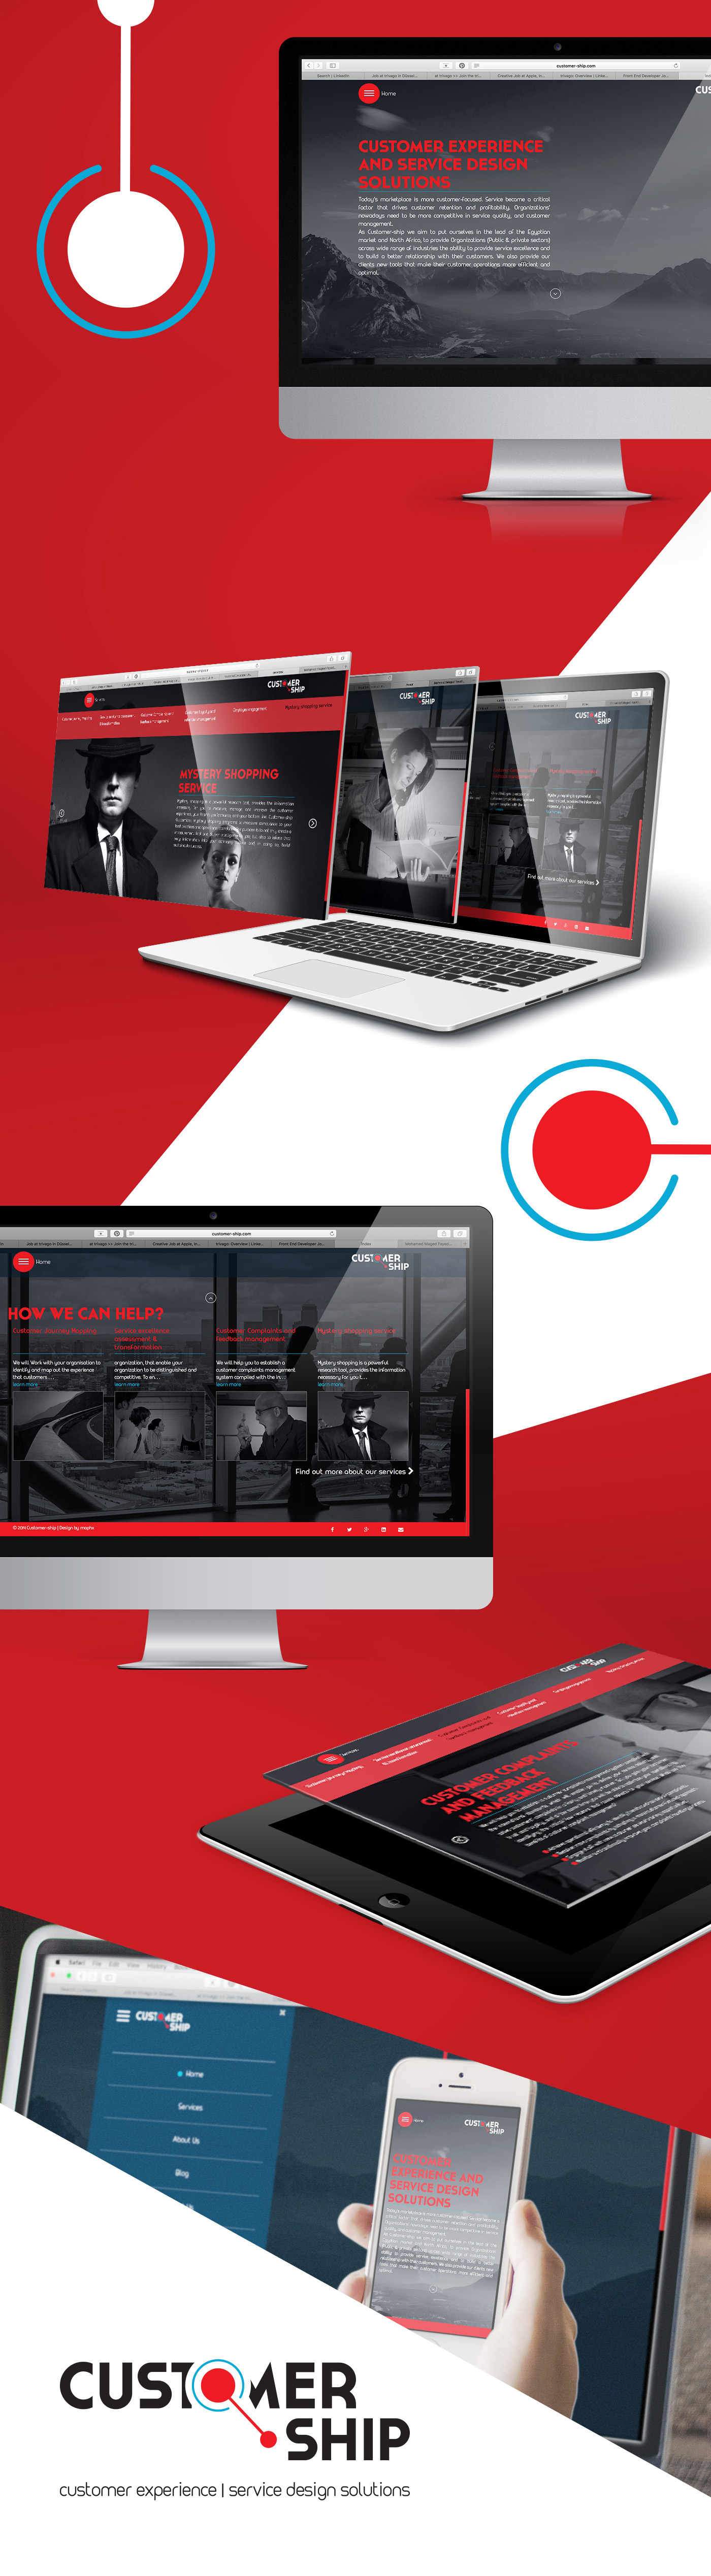 Website customership Service design red egypt